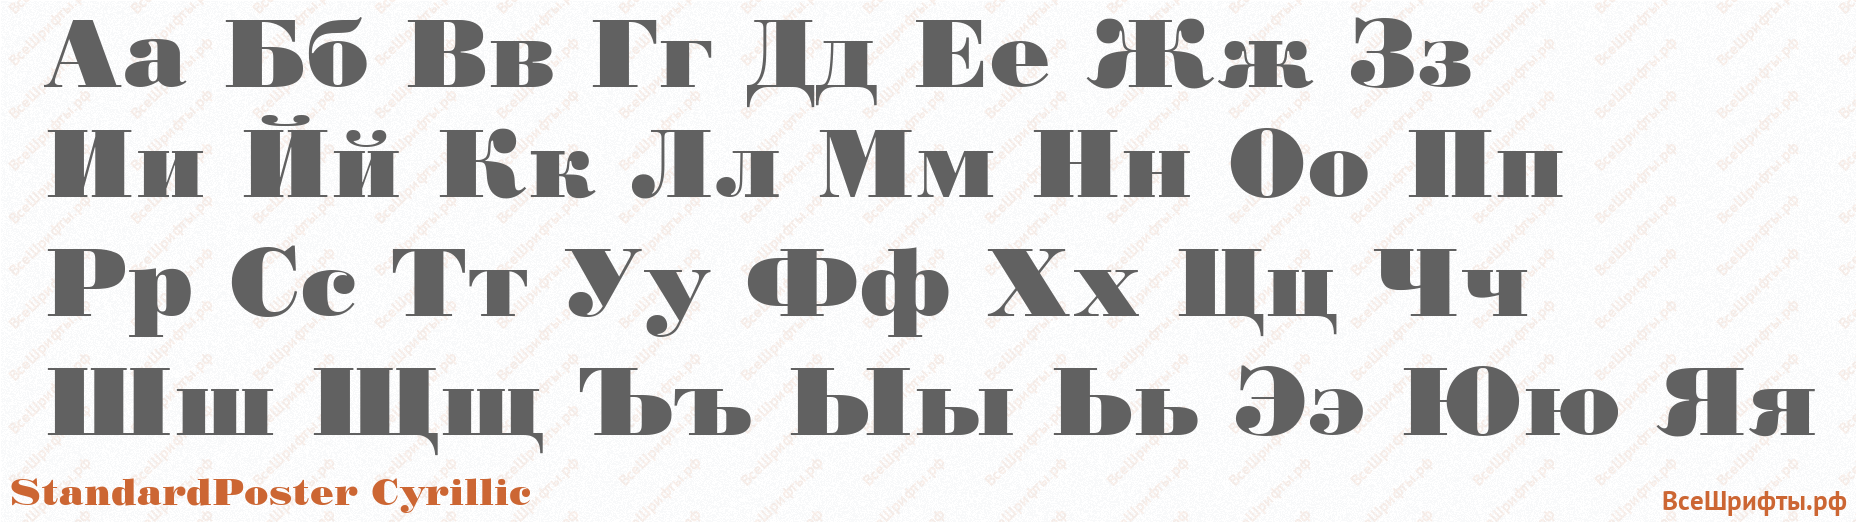 Шрифт StandardPoster Cyrillic с русскими буквами